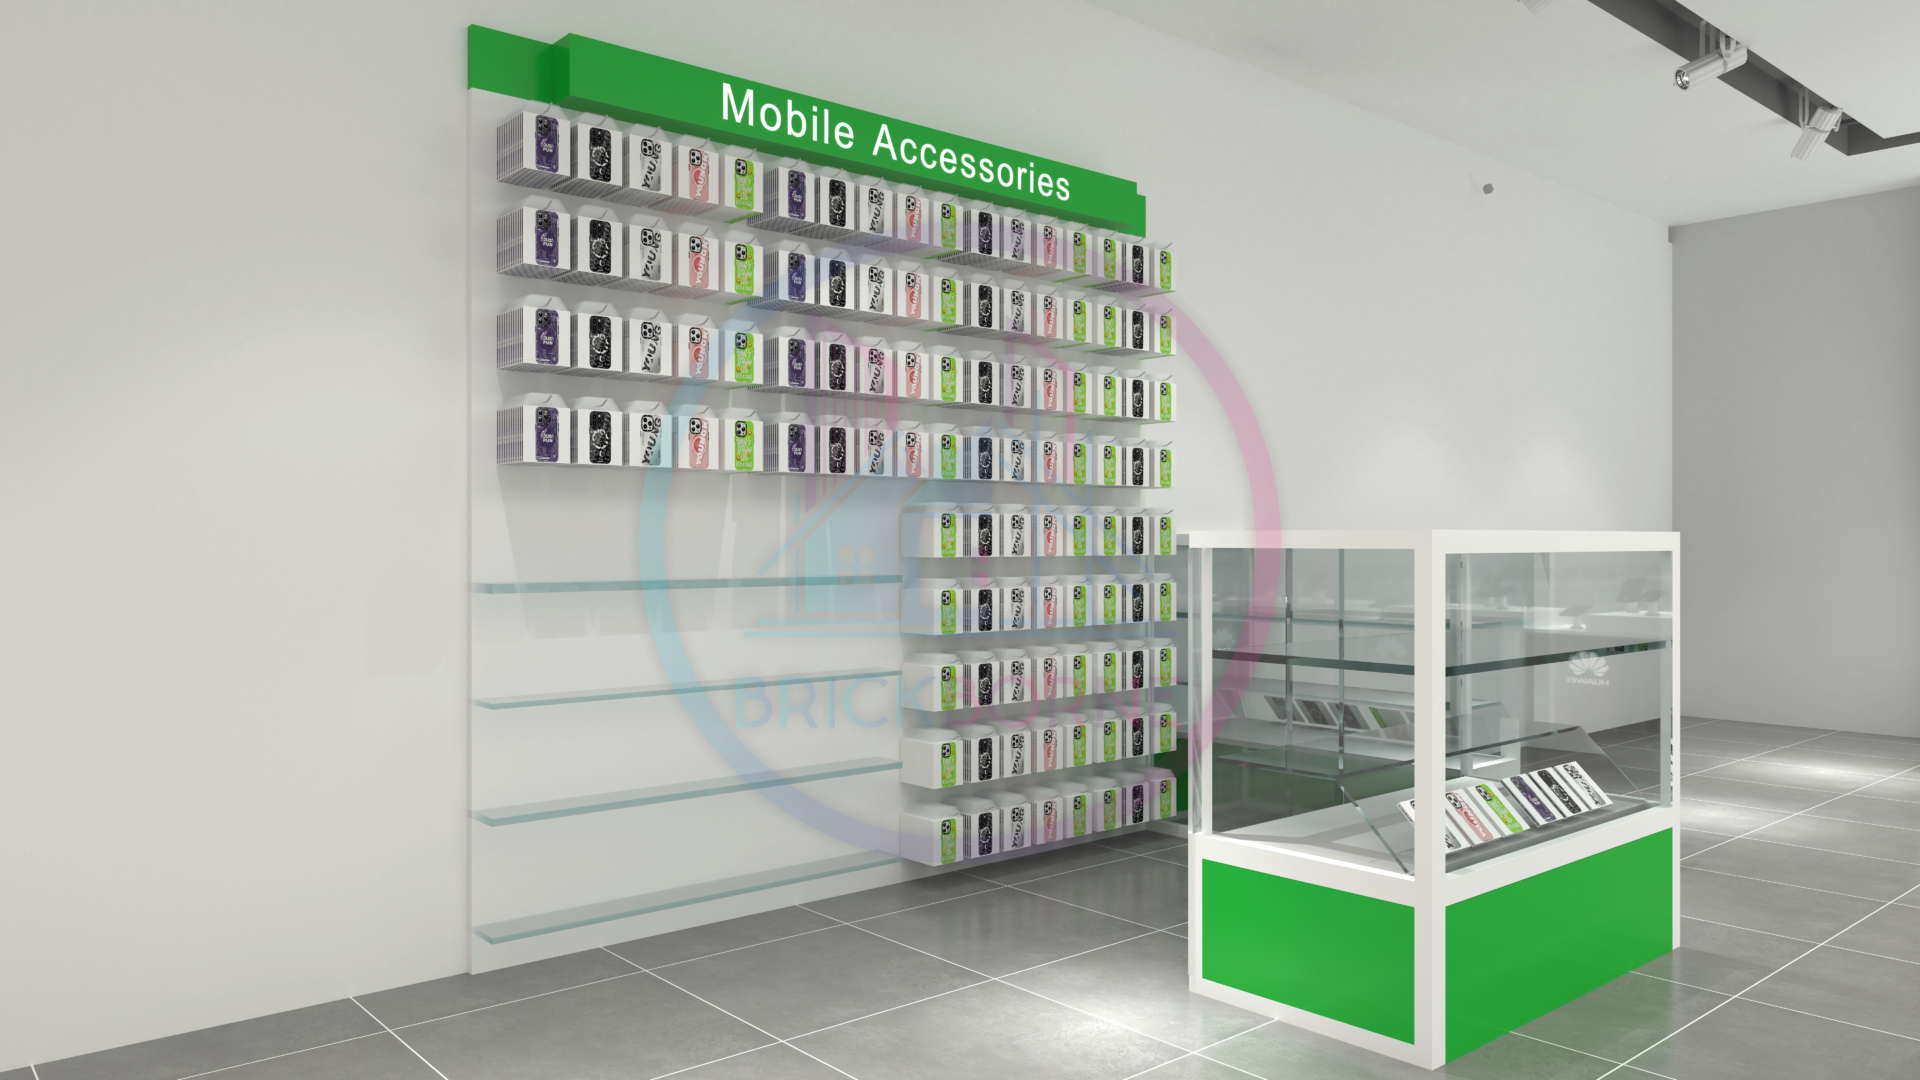 Renderings of A Mobile Accessories Kiosk